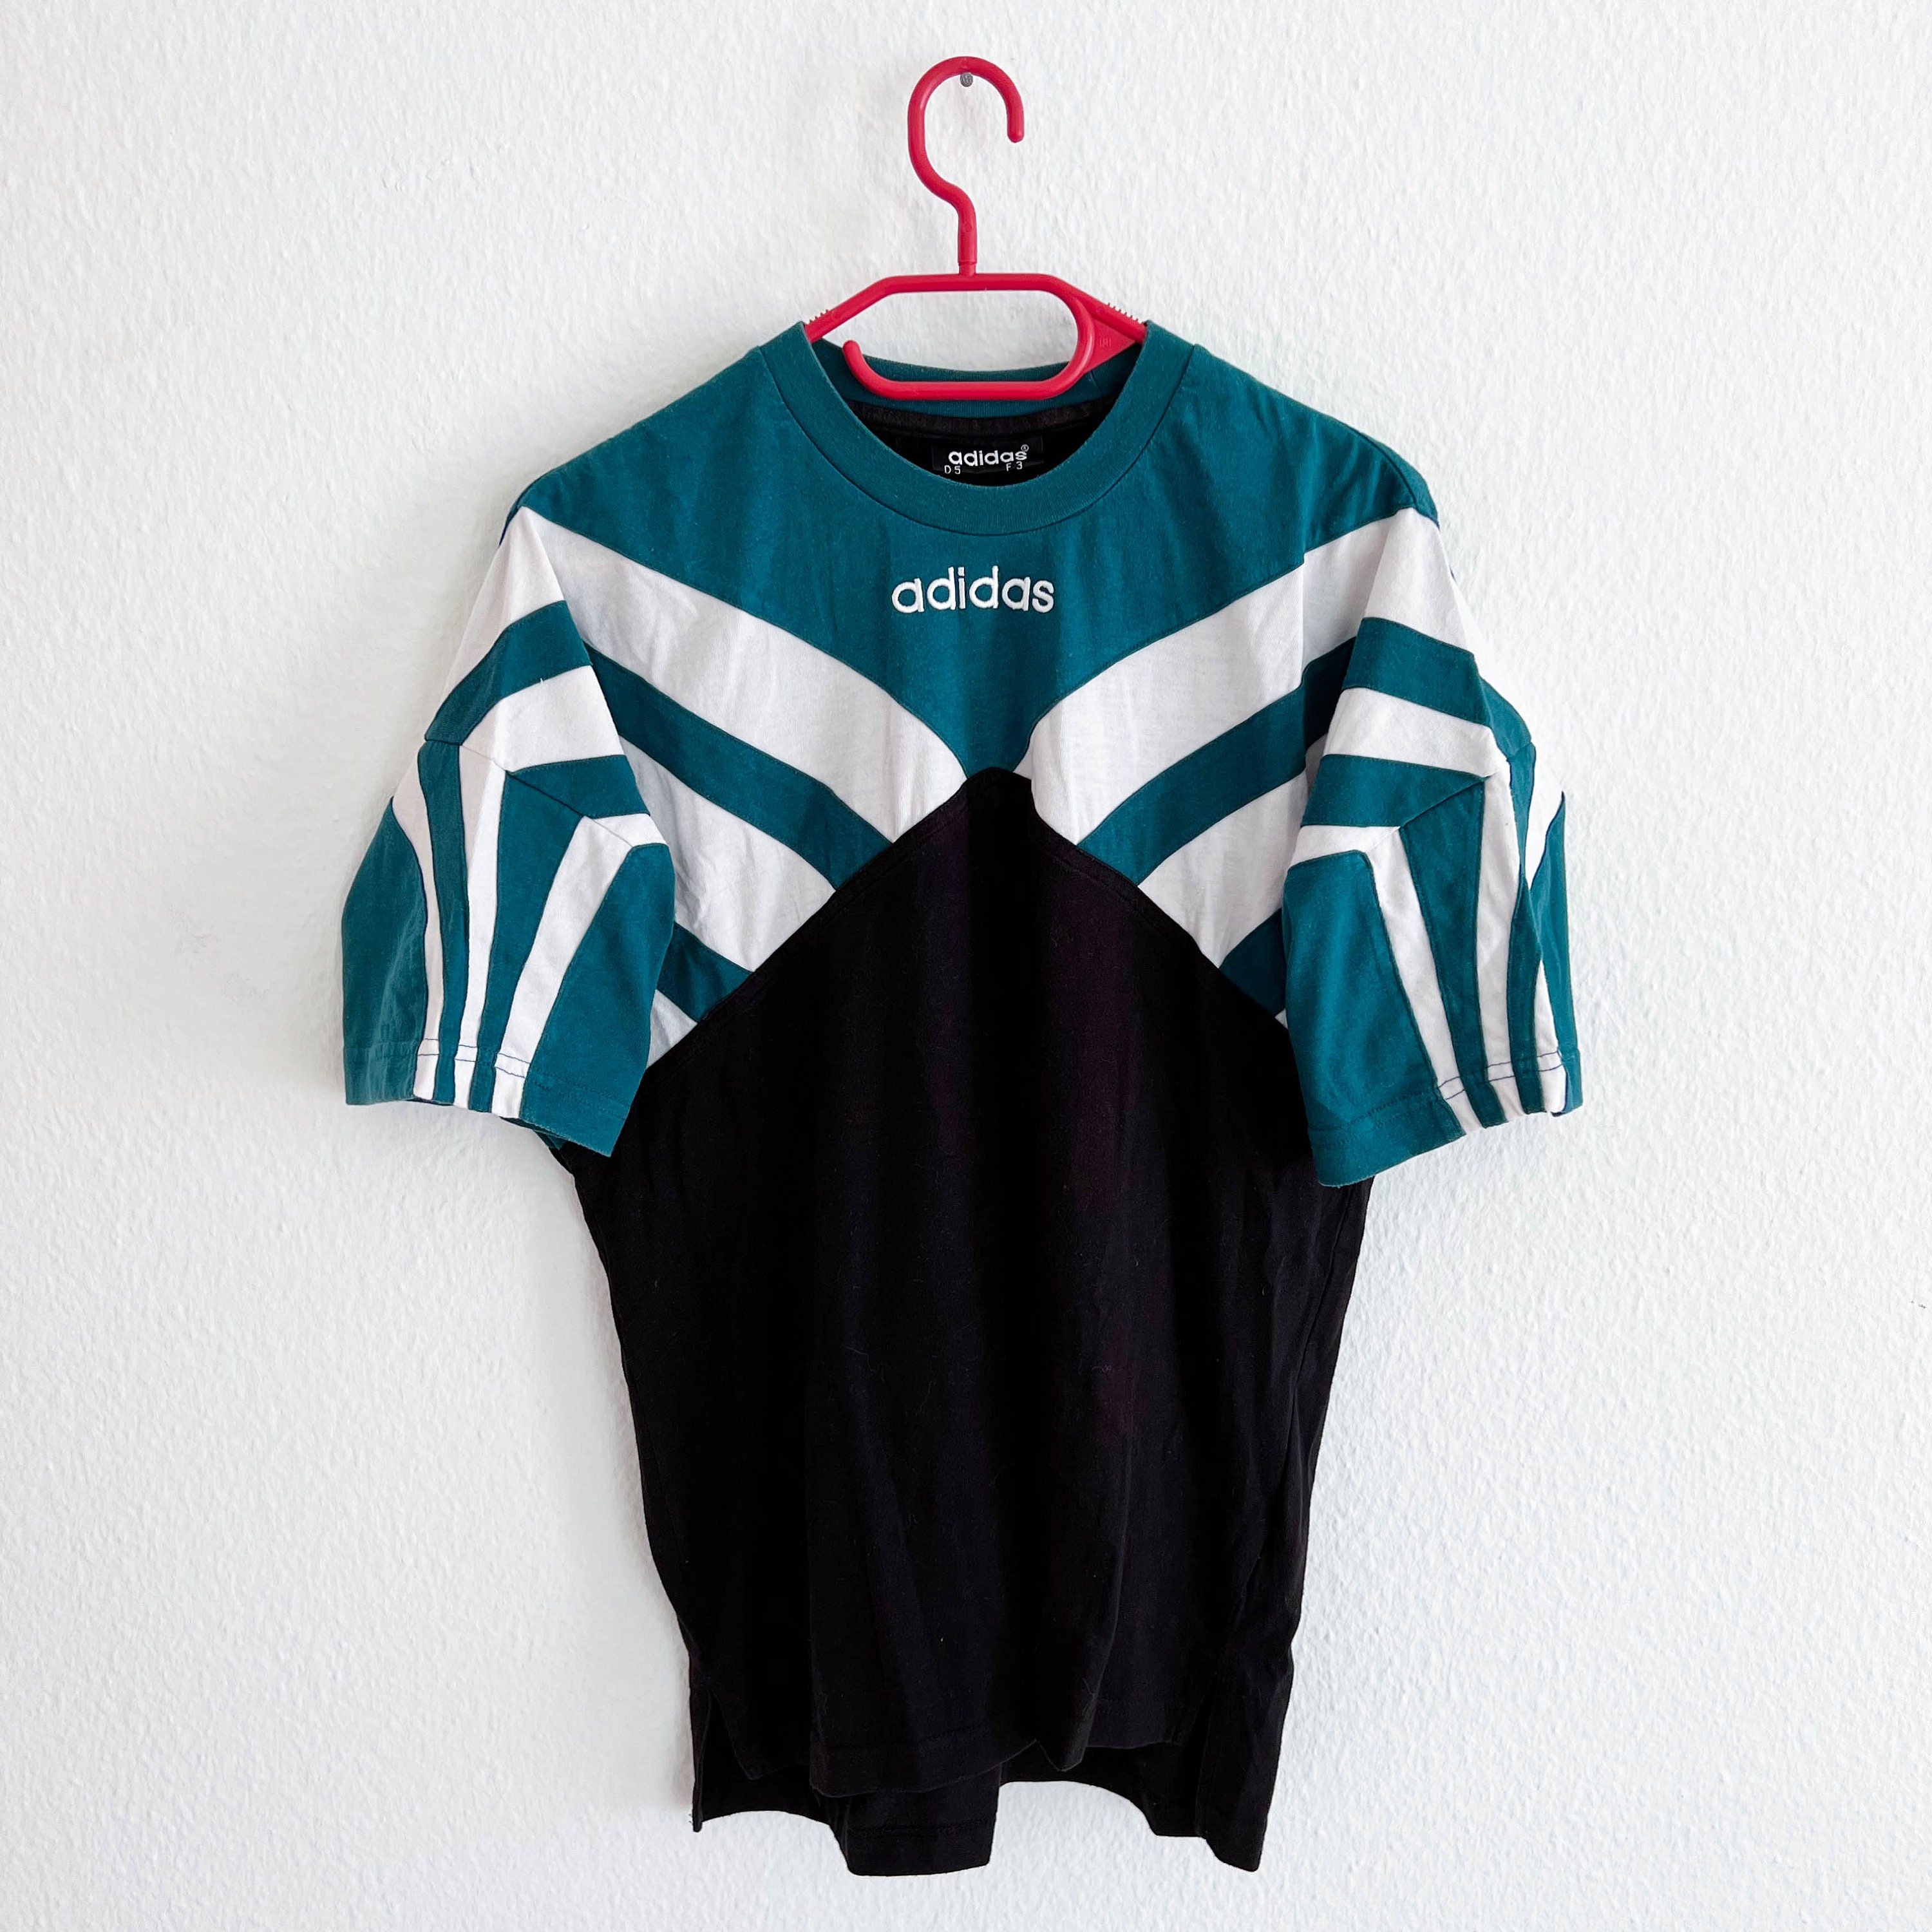 Afwijzen bout schedel SIZE M Adidas Vintage Shirt T-shirt Retro 90s - Etsy